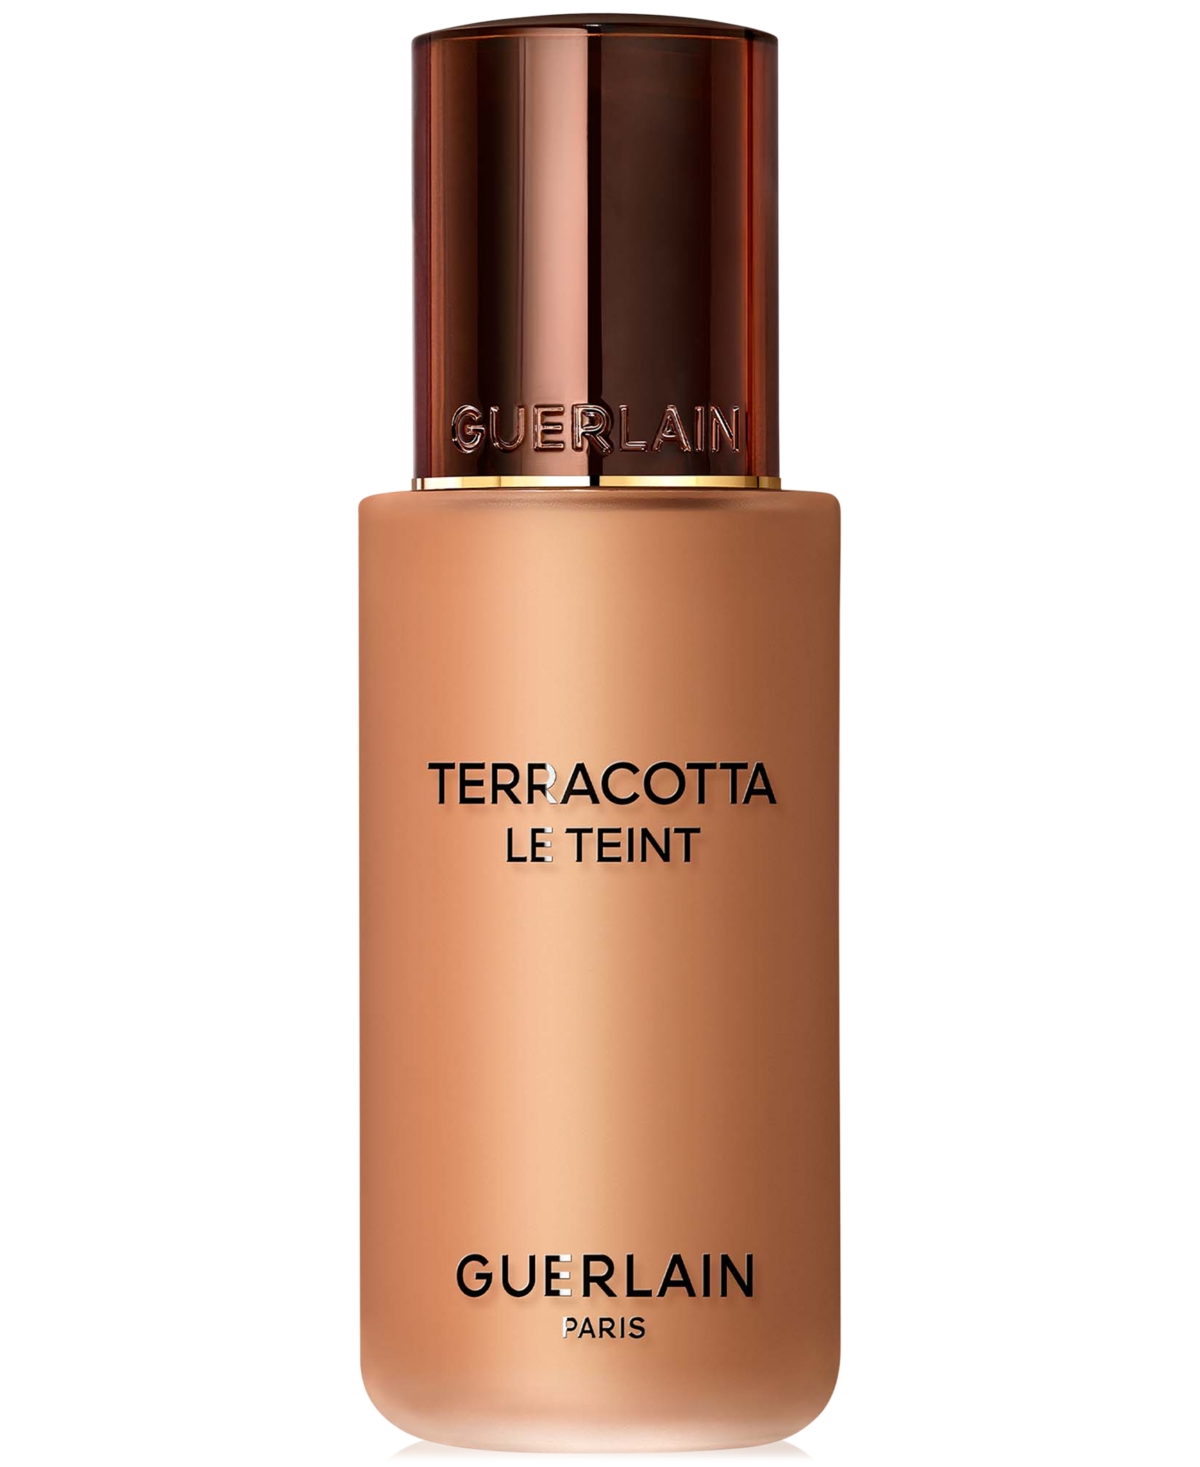 Guerlain Terracotta Le Teint Healthy Glow Foundation In W Medium Skin With Golden Undertones